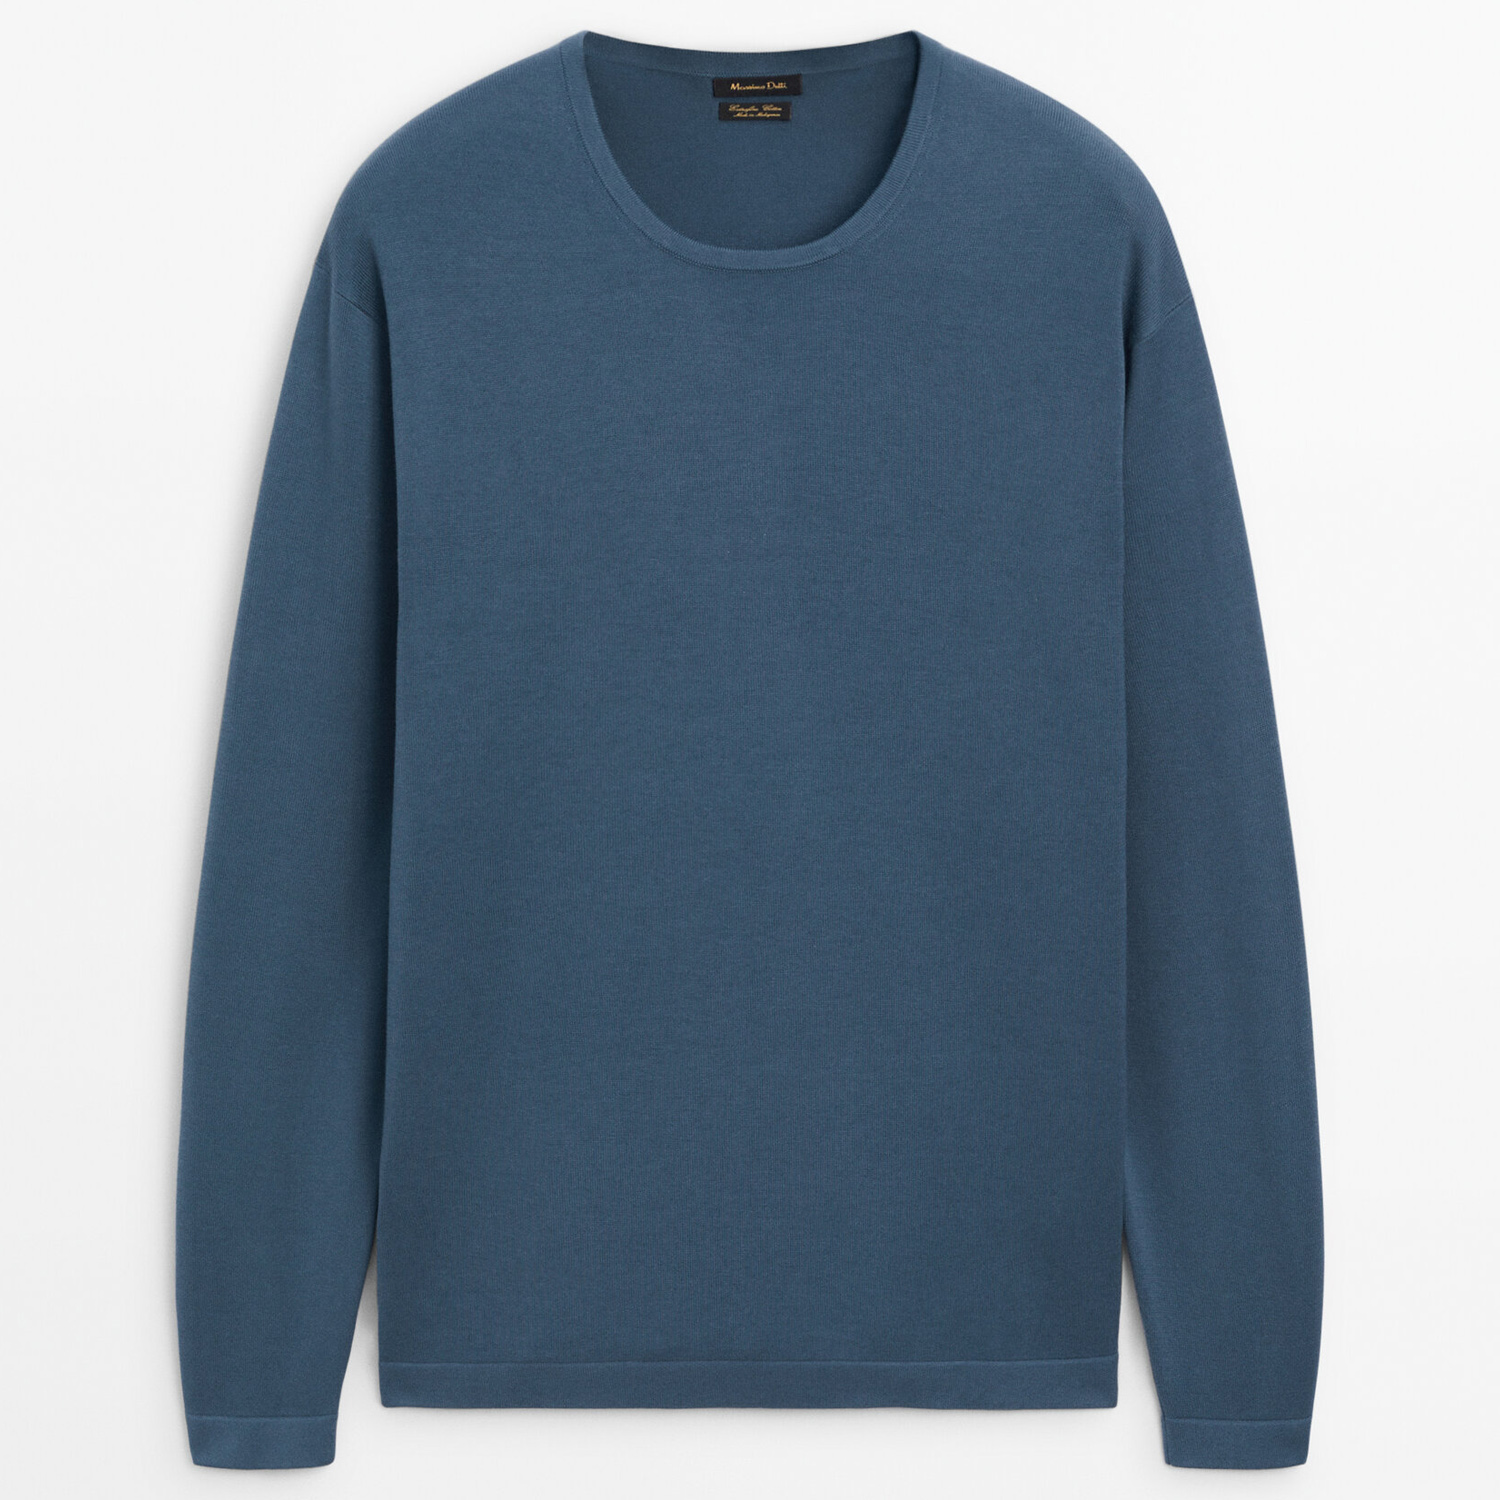 Свитер Massimo Dutti Crew Neck Knit, синий свитер massimo dutti crew neck cotton mesh knit черный